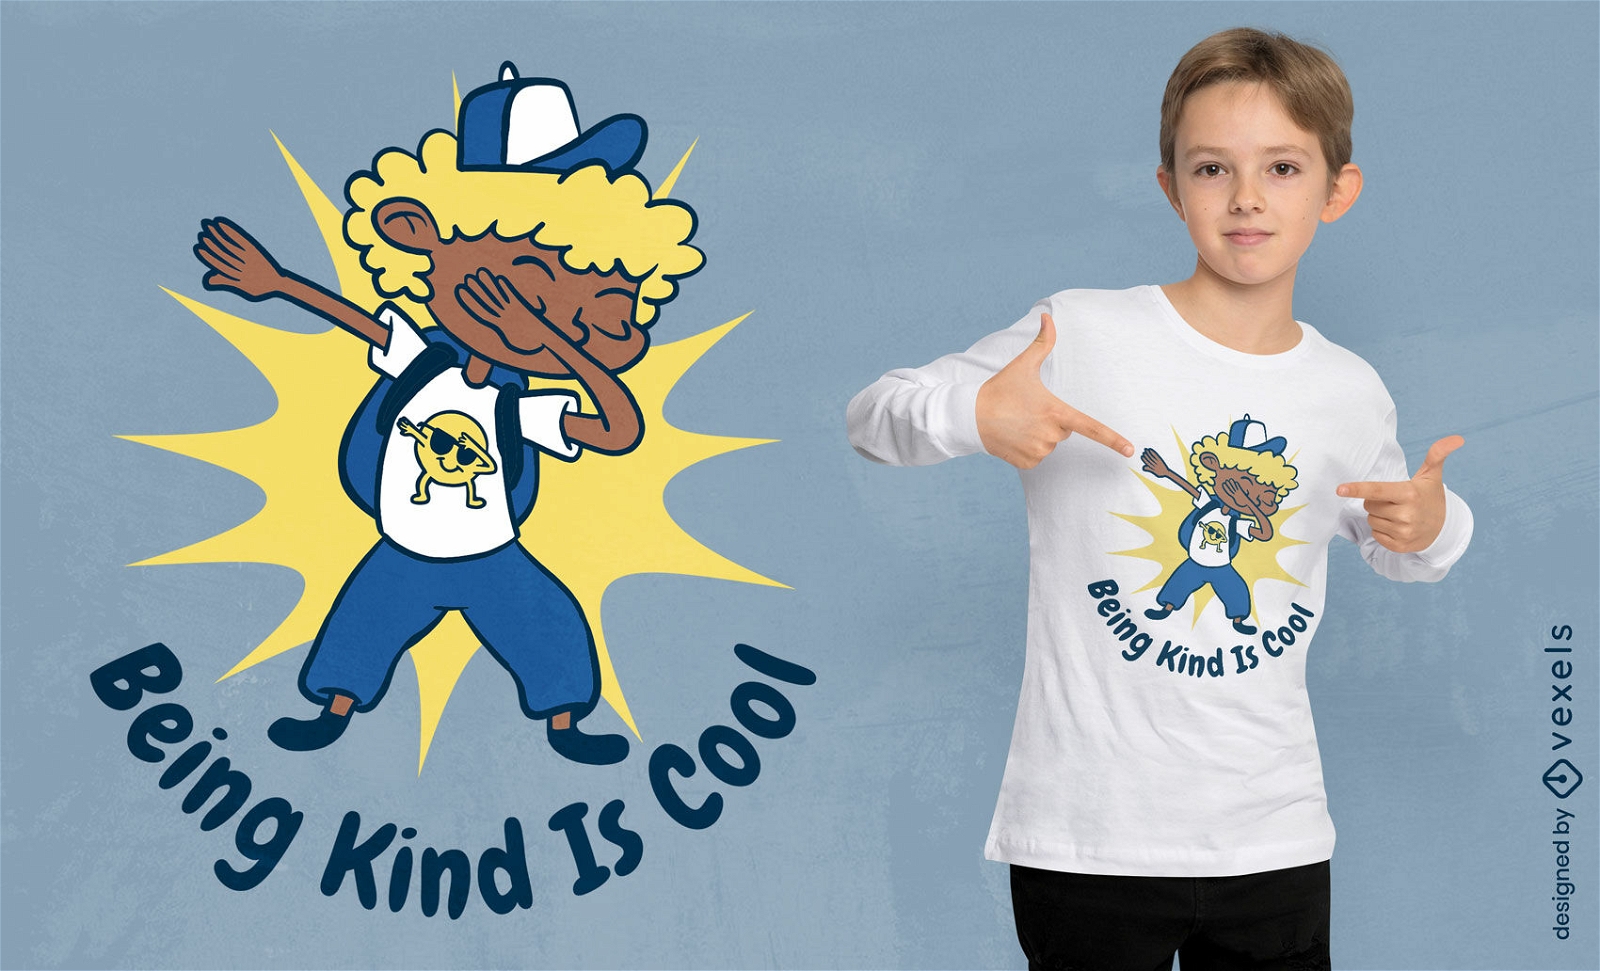 Ser gentil é um design legal de camiseta infantil